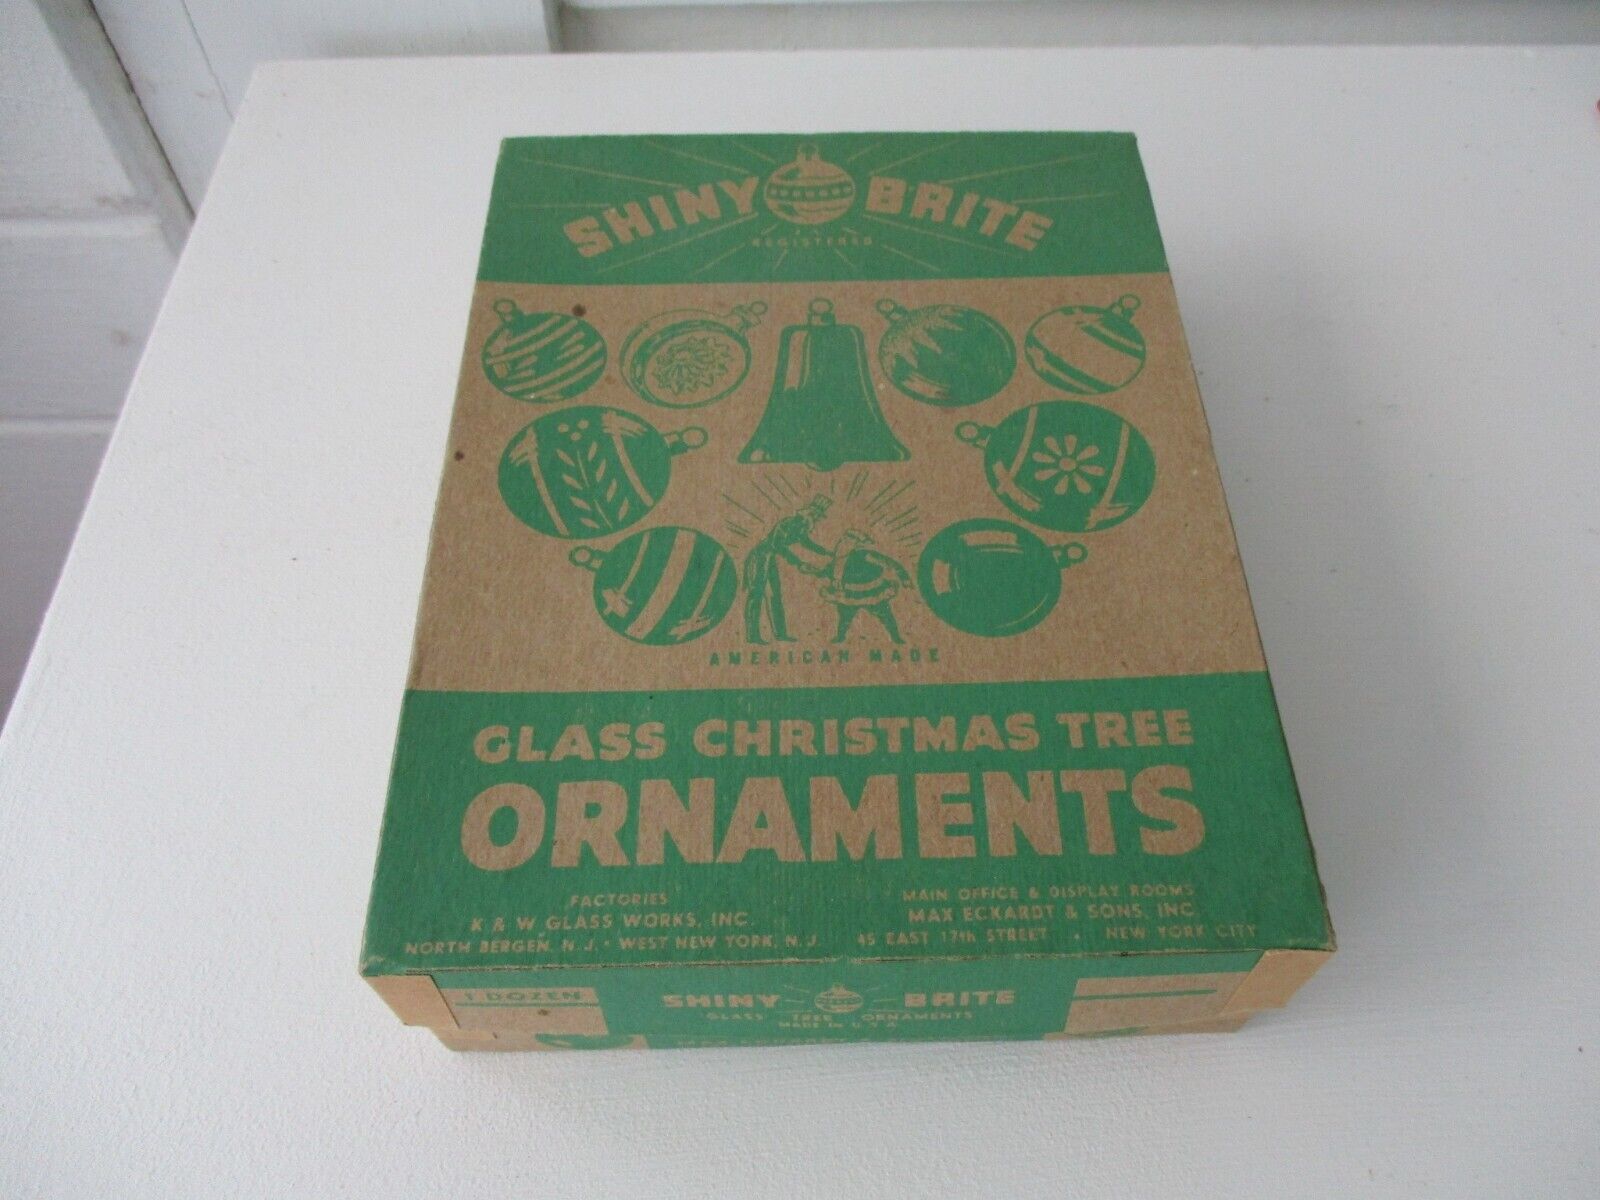 Vintage Shiny Brite empty ornament box, small size, excellent shape